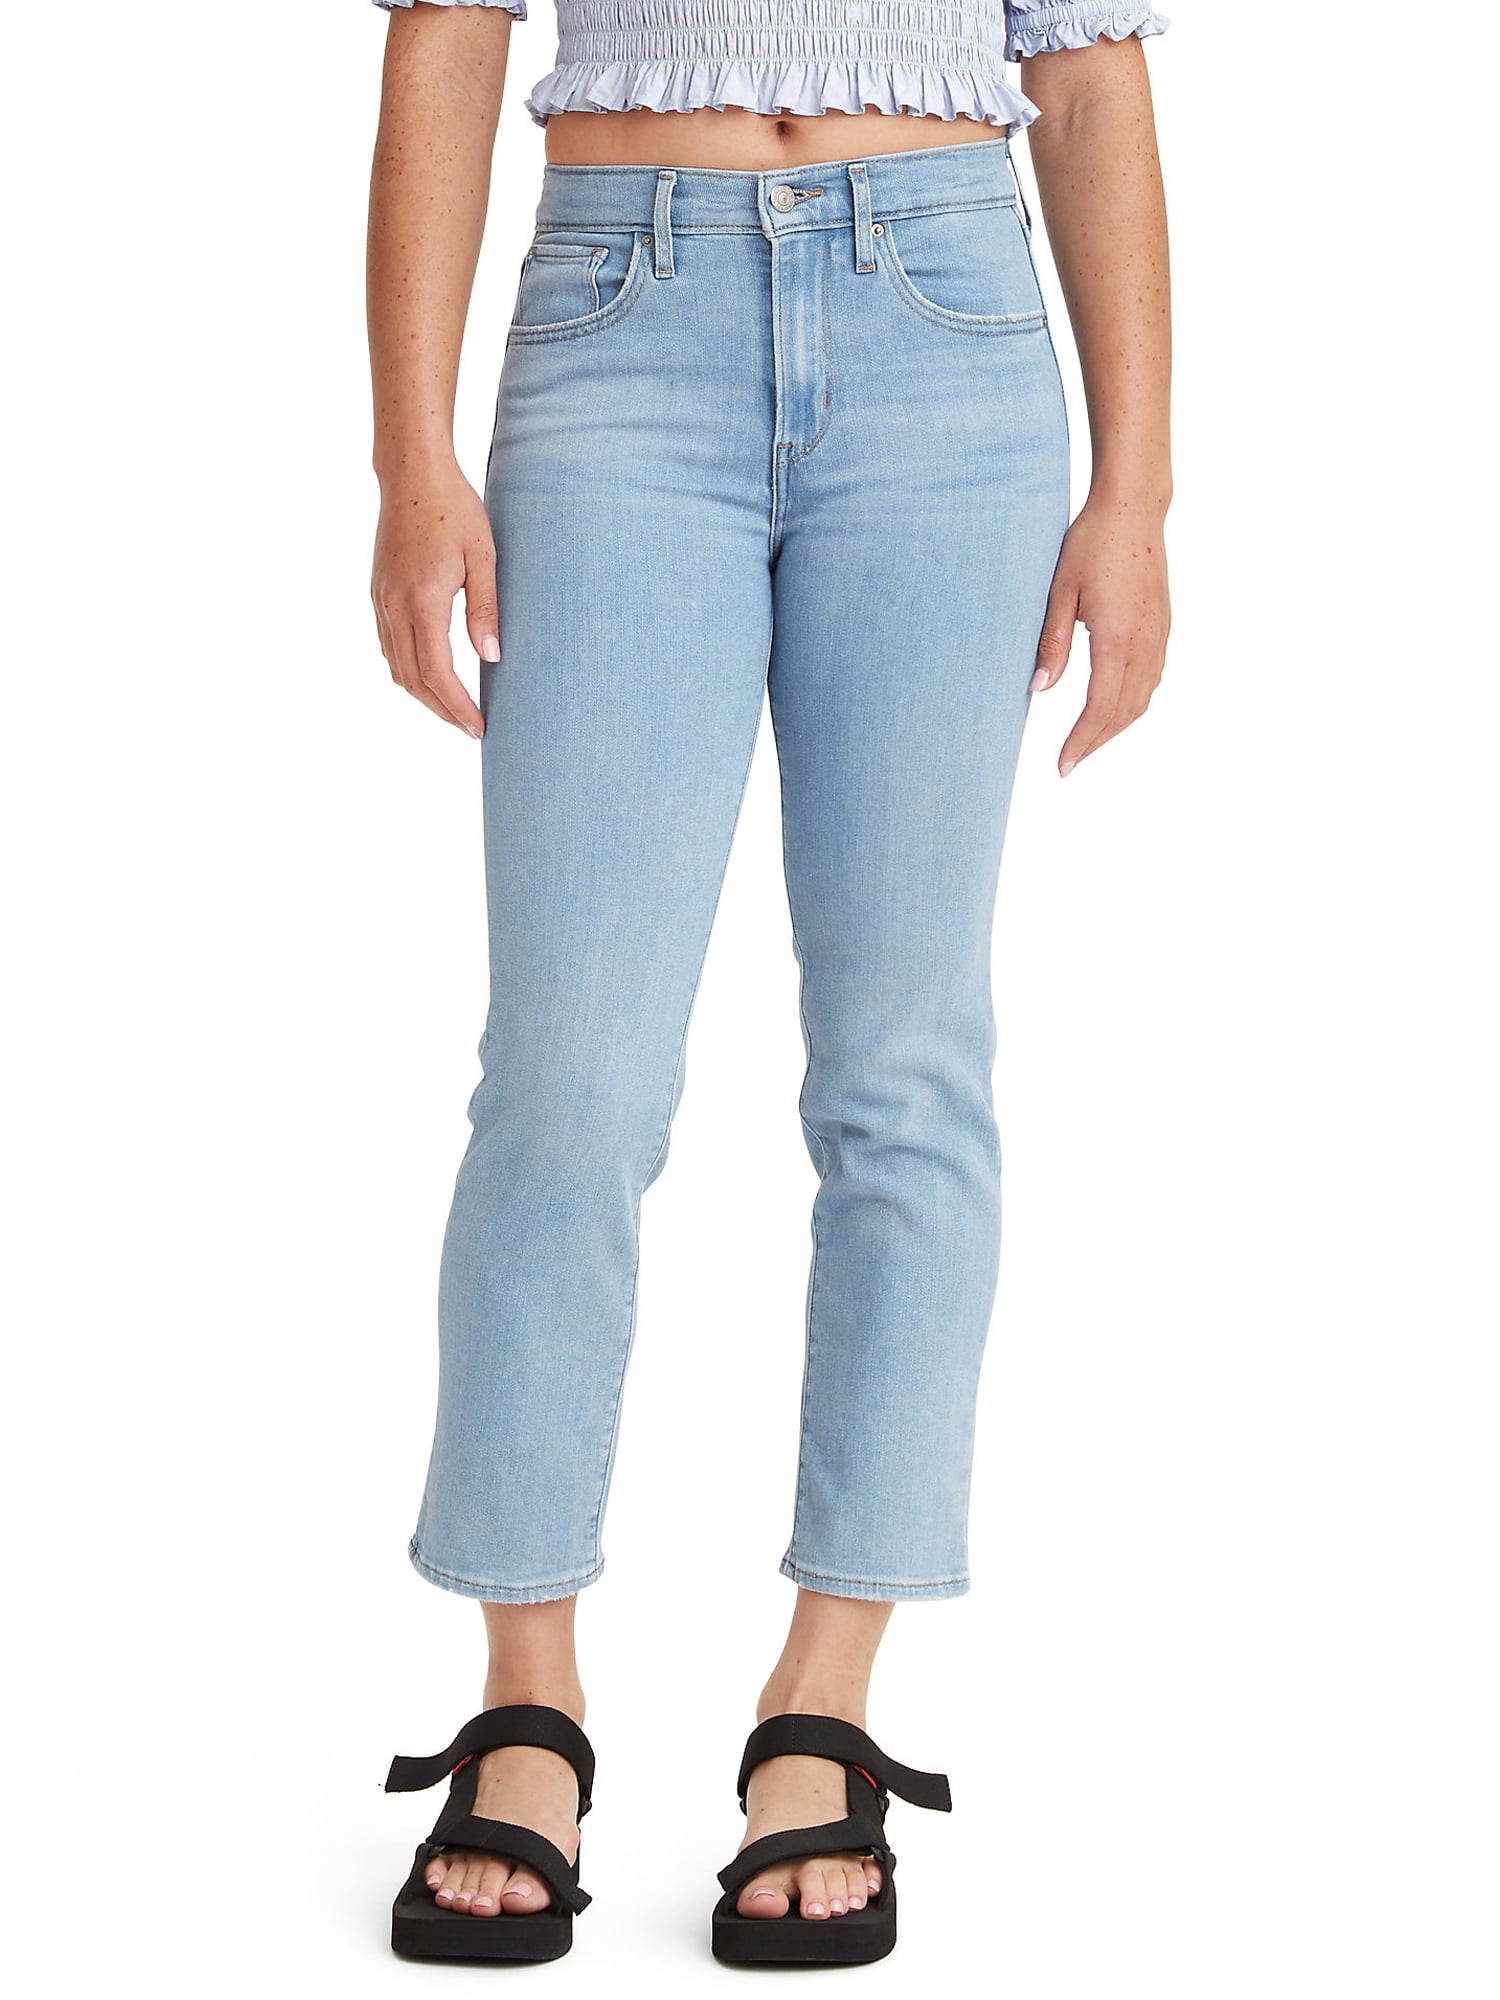 Levi's Original Women's 724 High-Rise Straight Crop Jeans - Walmart.com